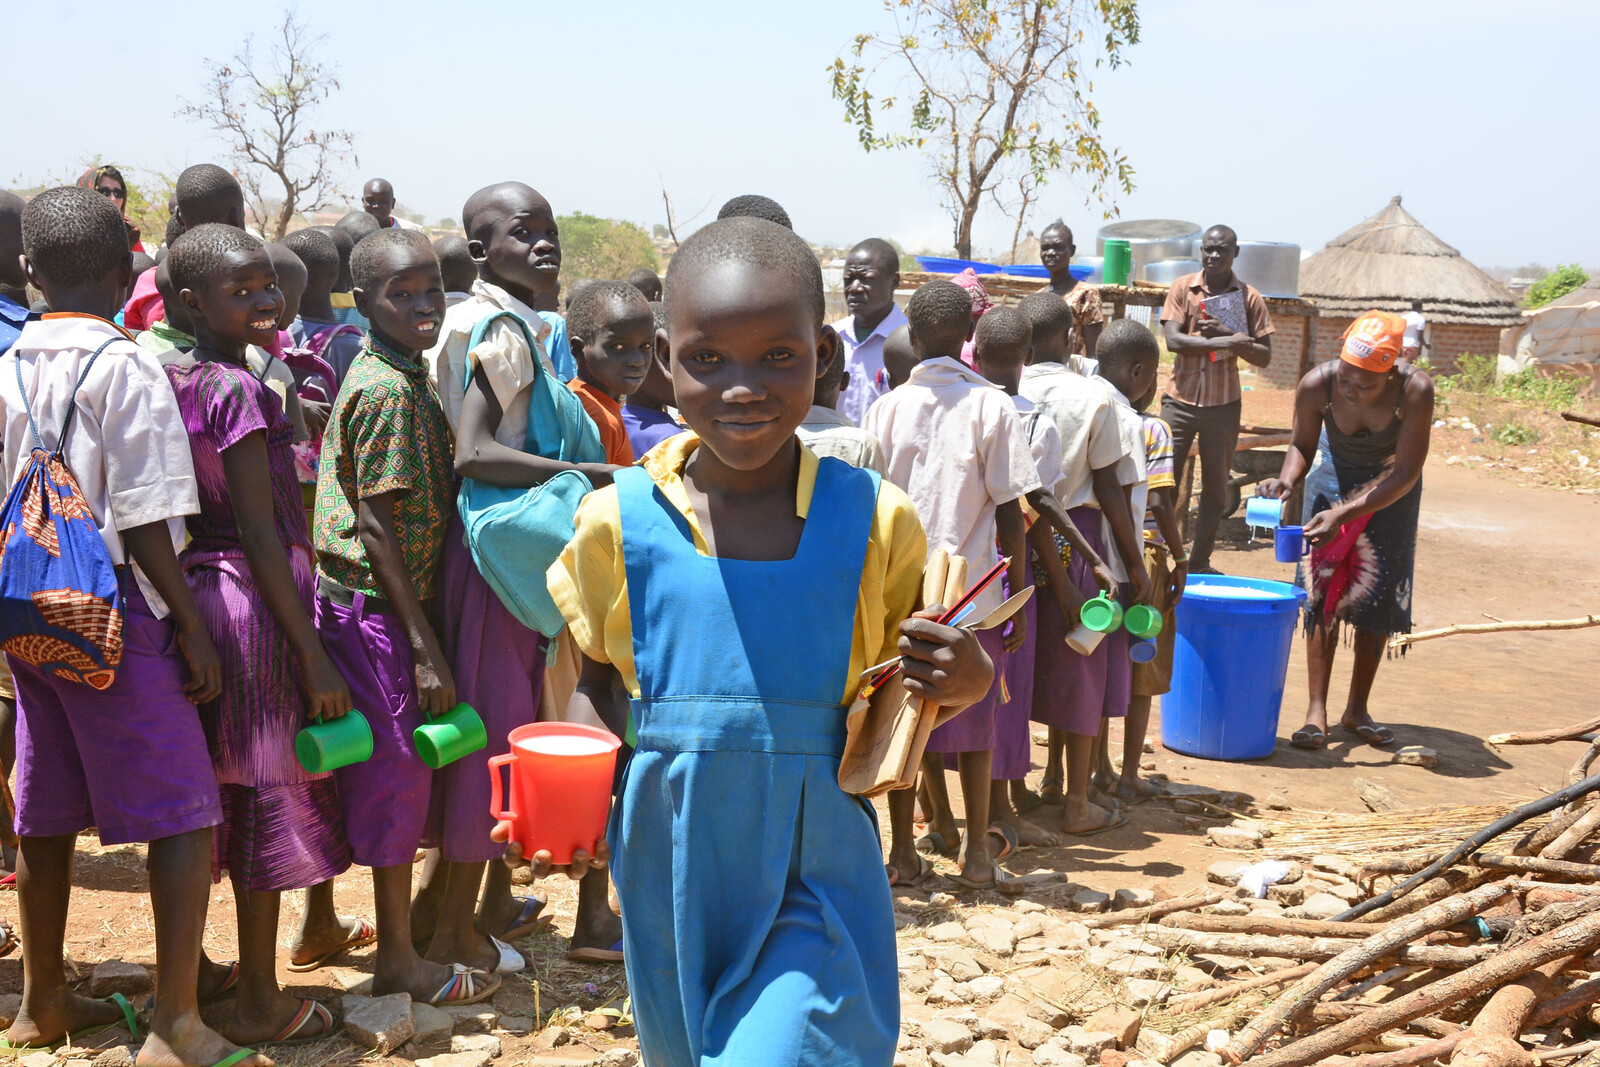 Schulkinder in Uganda, Afrika